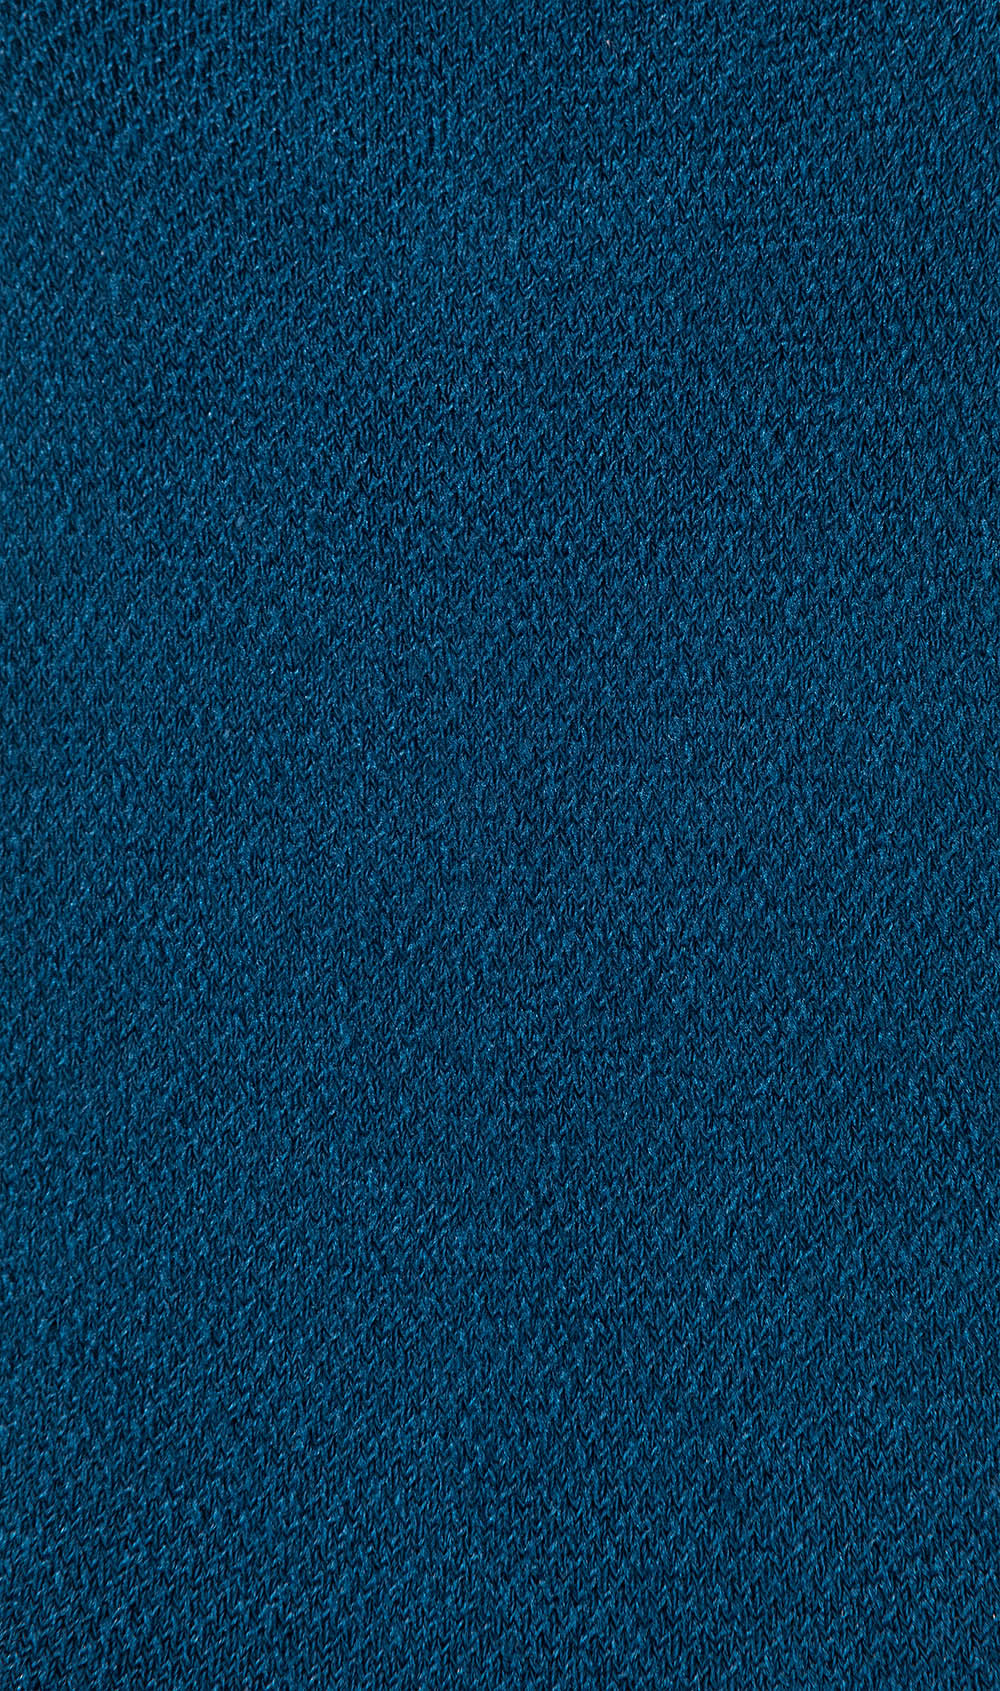 Marine Blue Low-Cut Socks Pattern